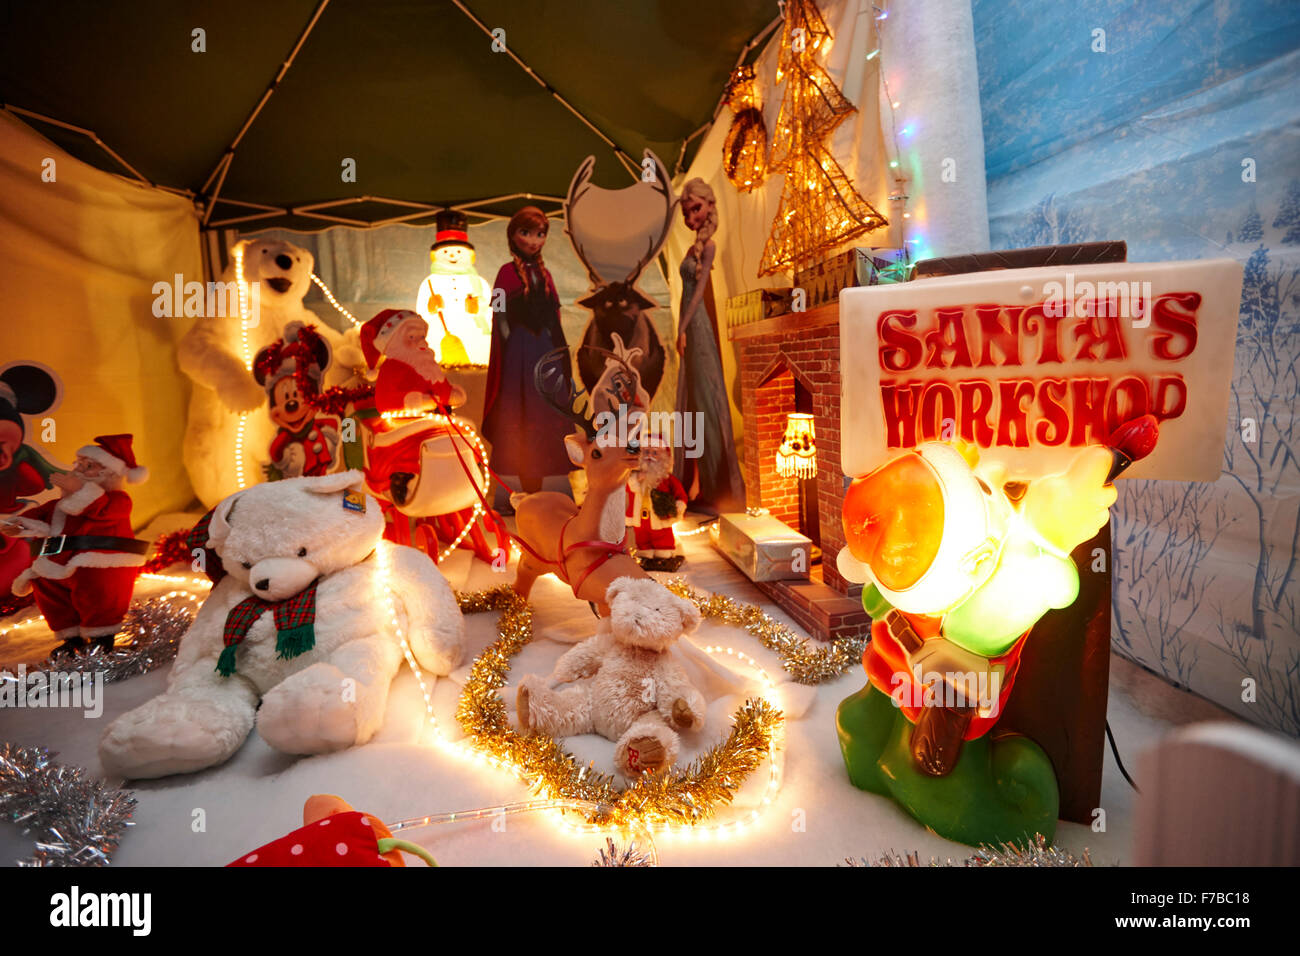 Santas workshop display in a temporary seasonal santa grotto in the uk ...